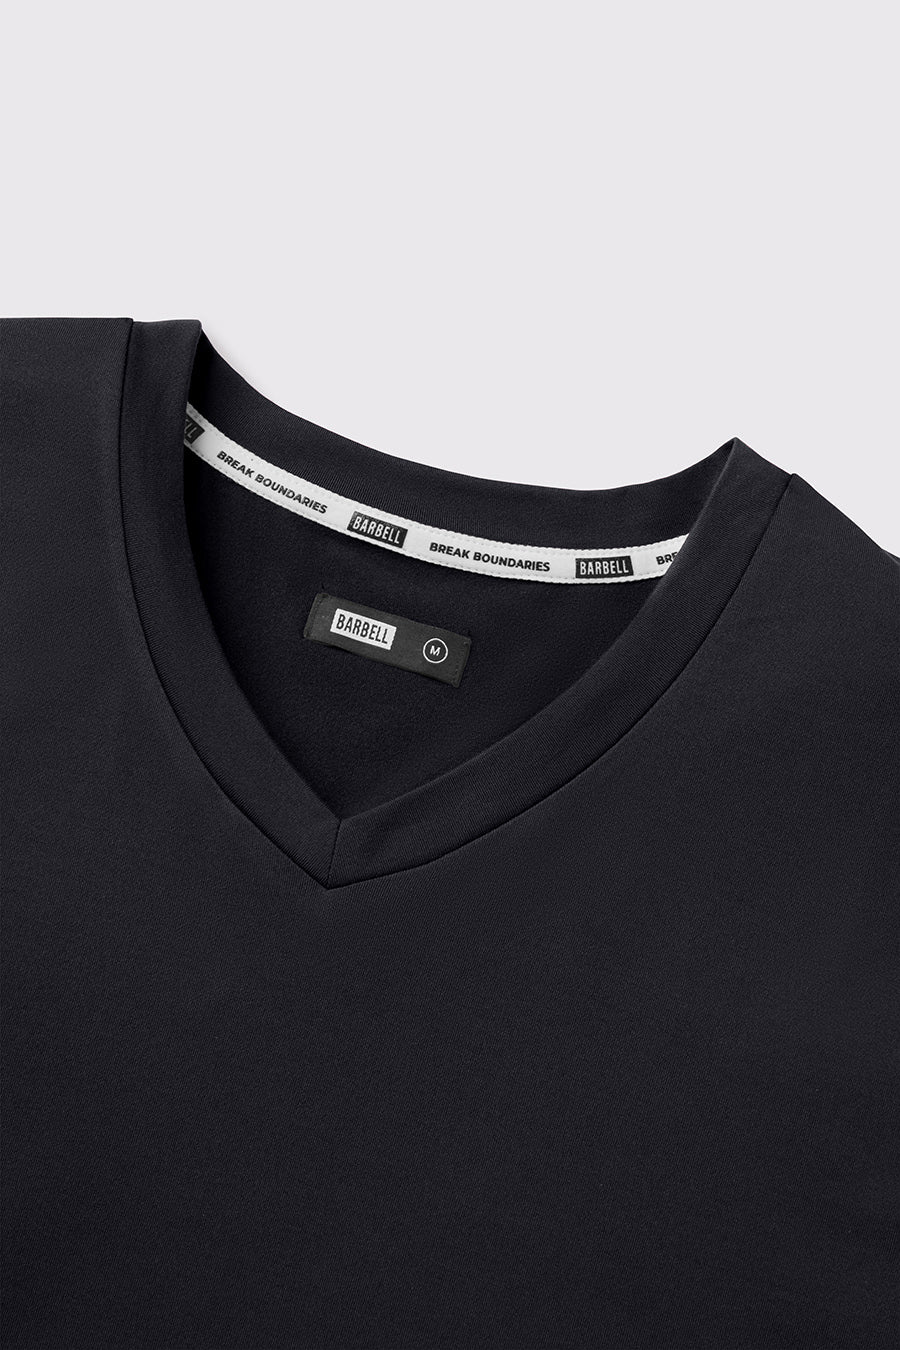 Havok V - Black - photo from collar detail #color_black